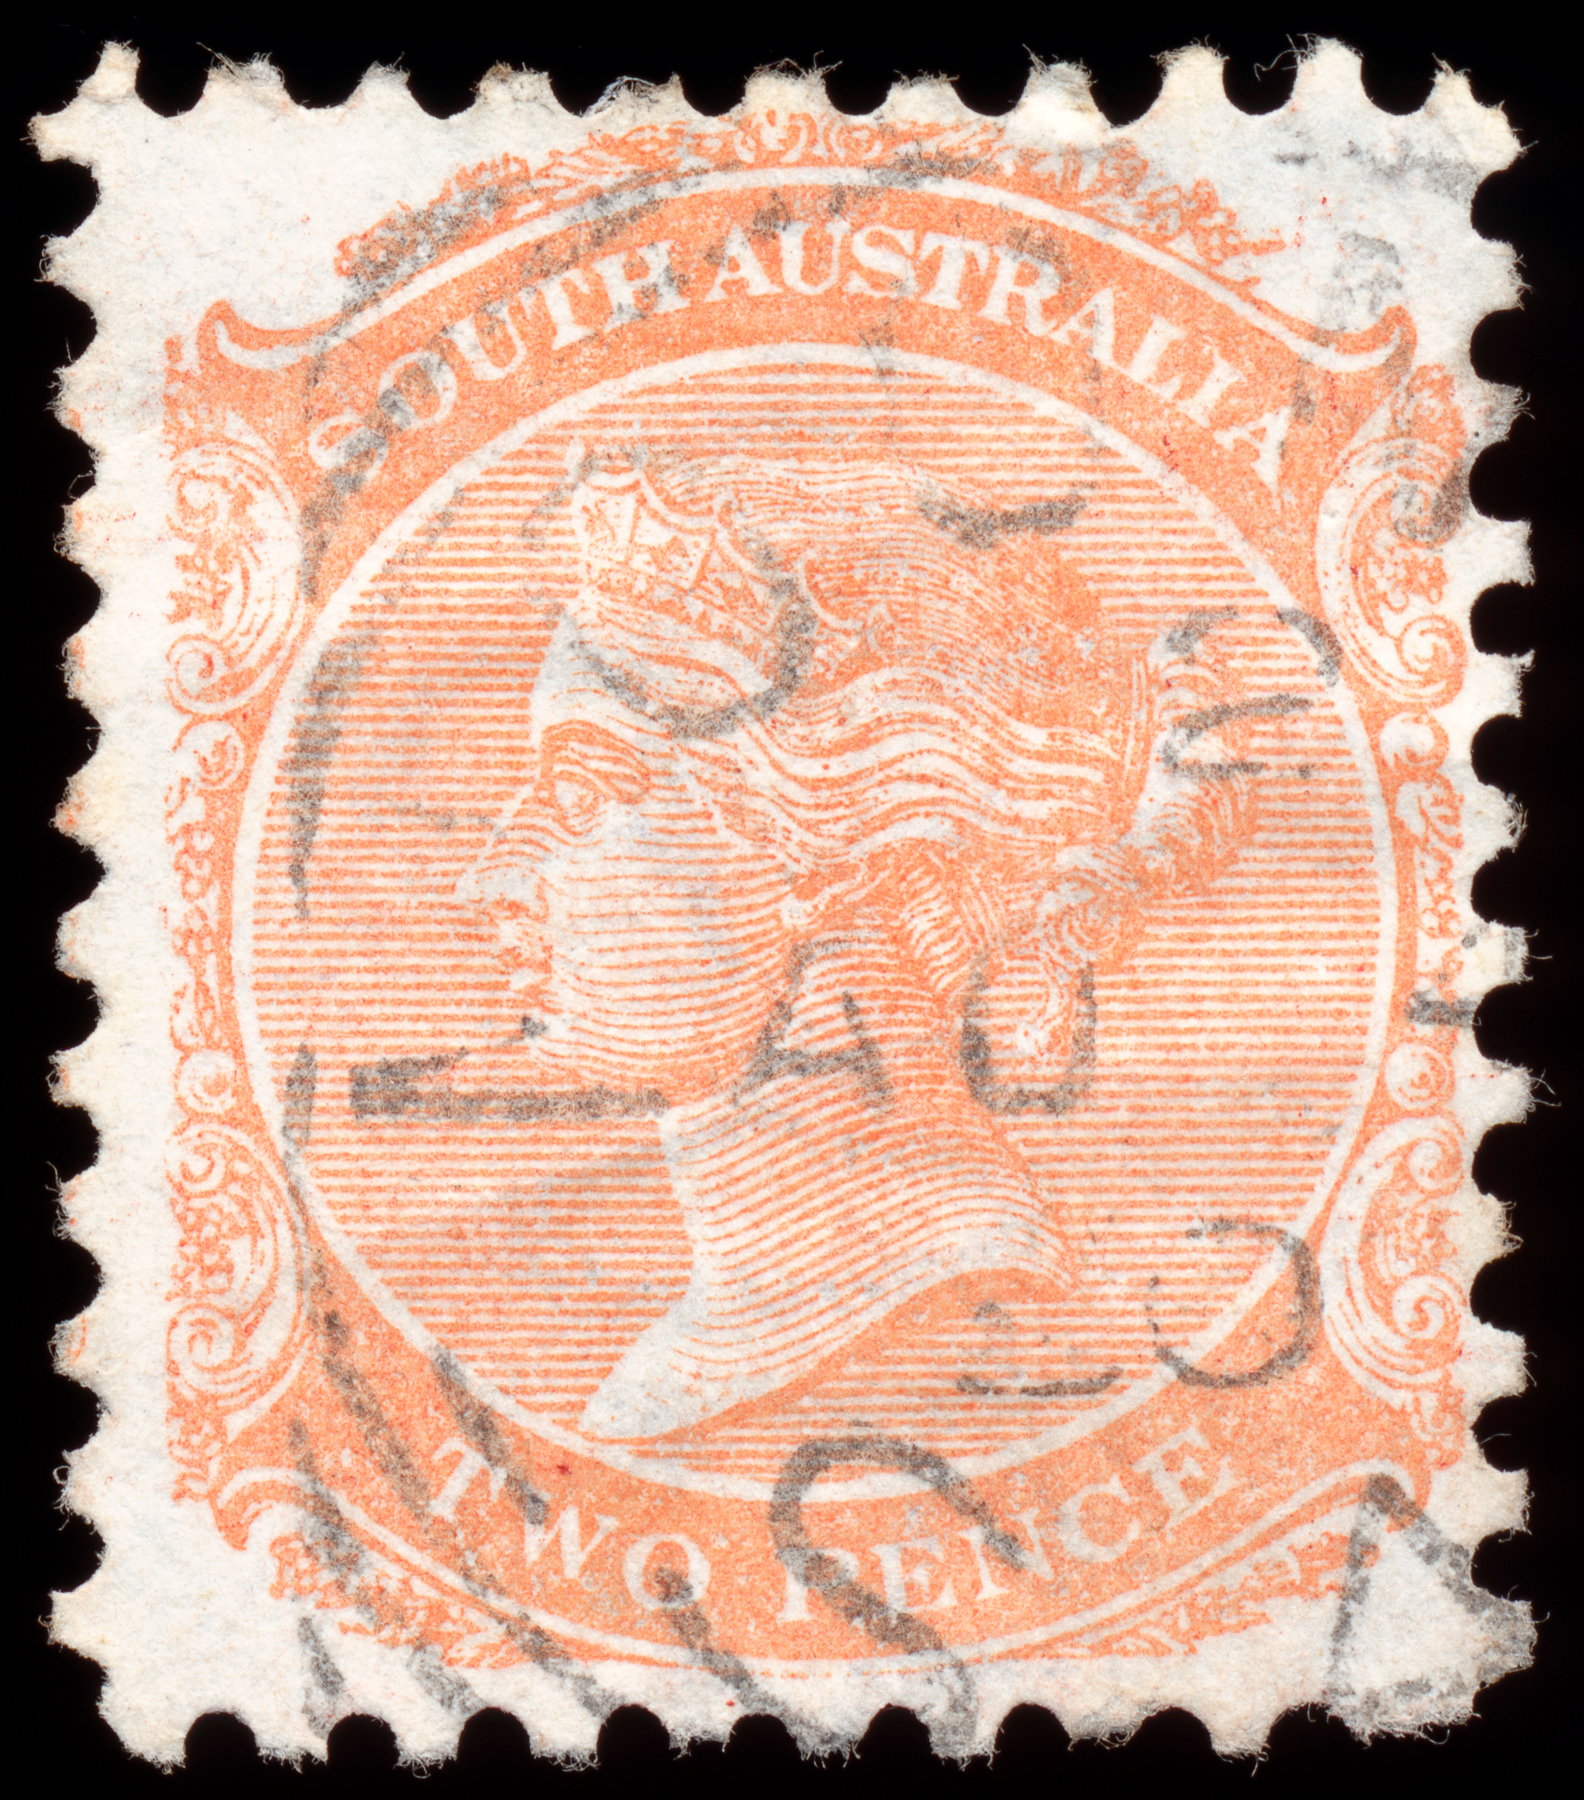 Orange queen victoria stamp photo